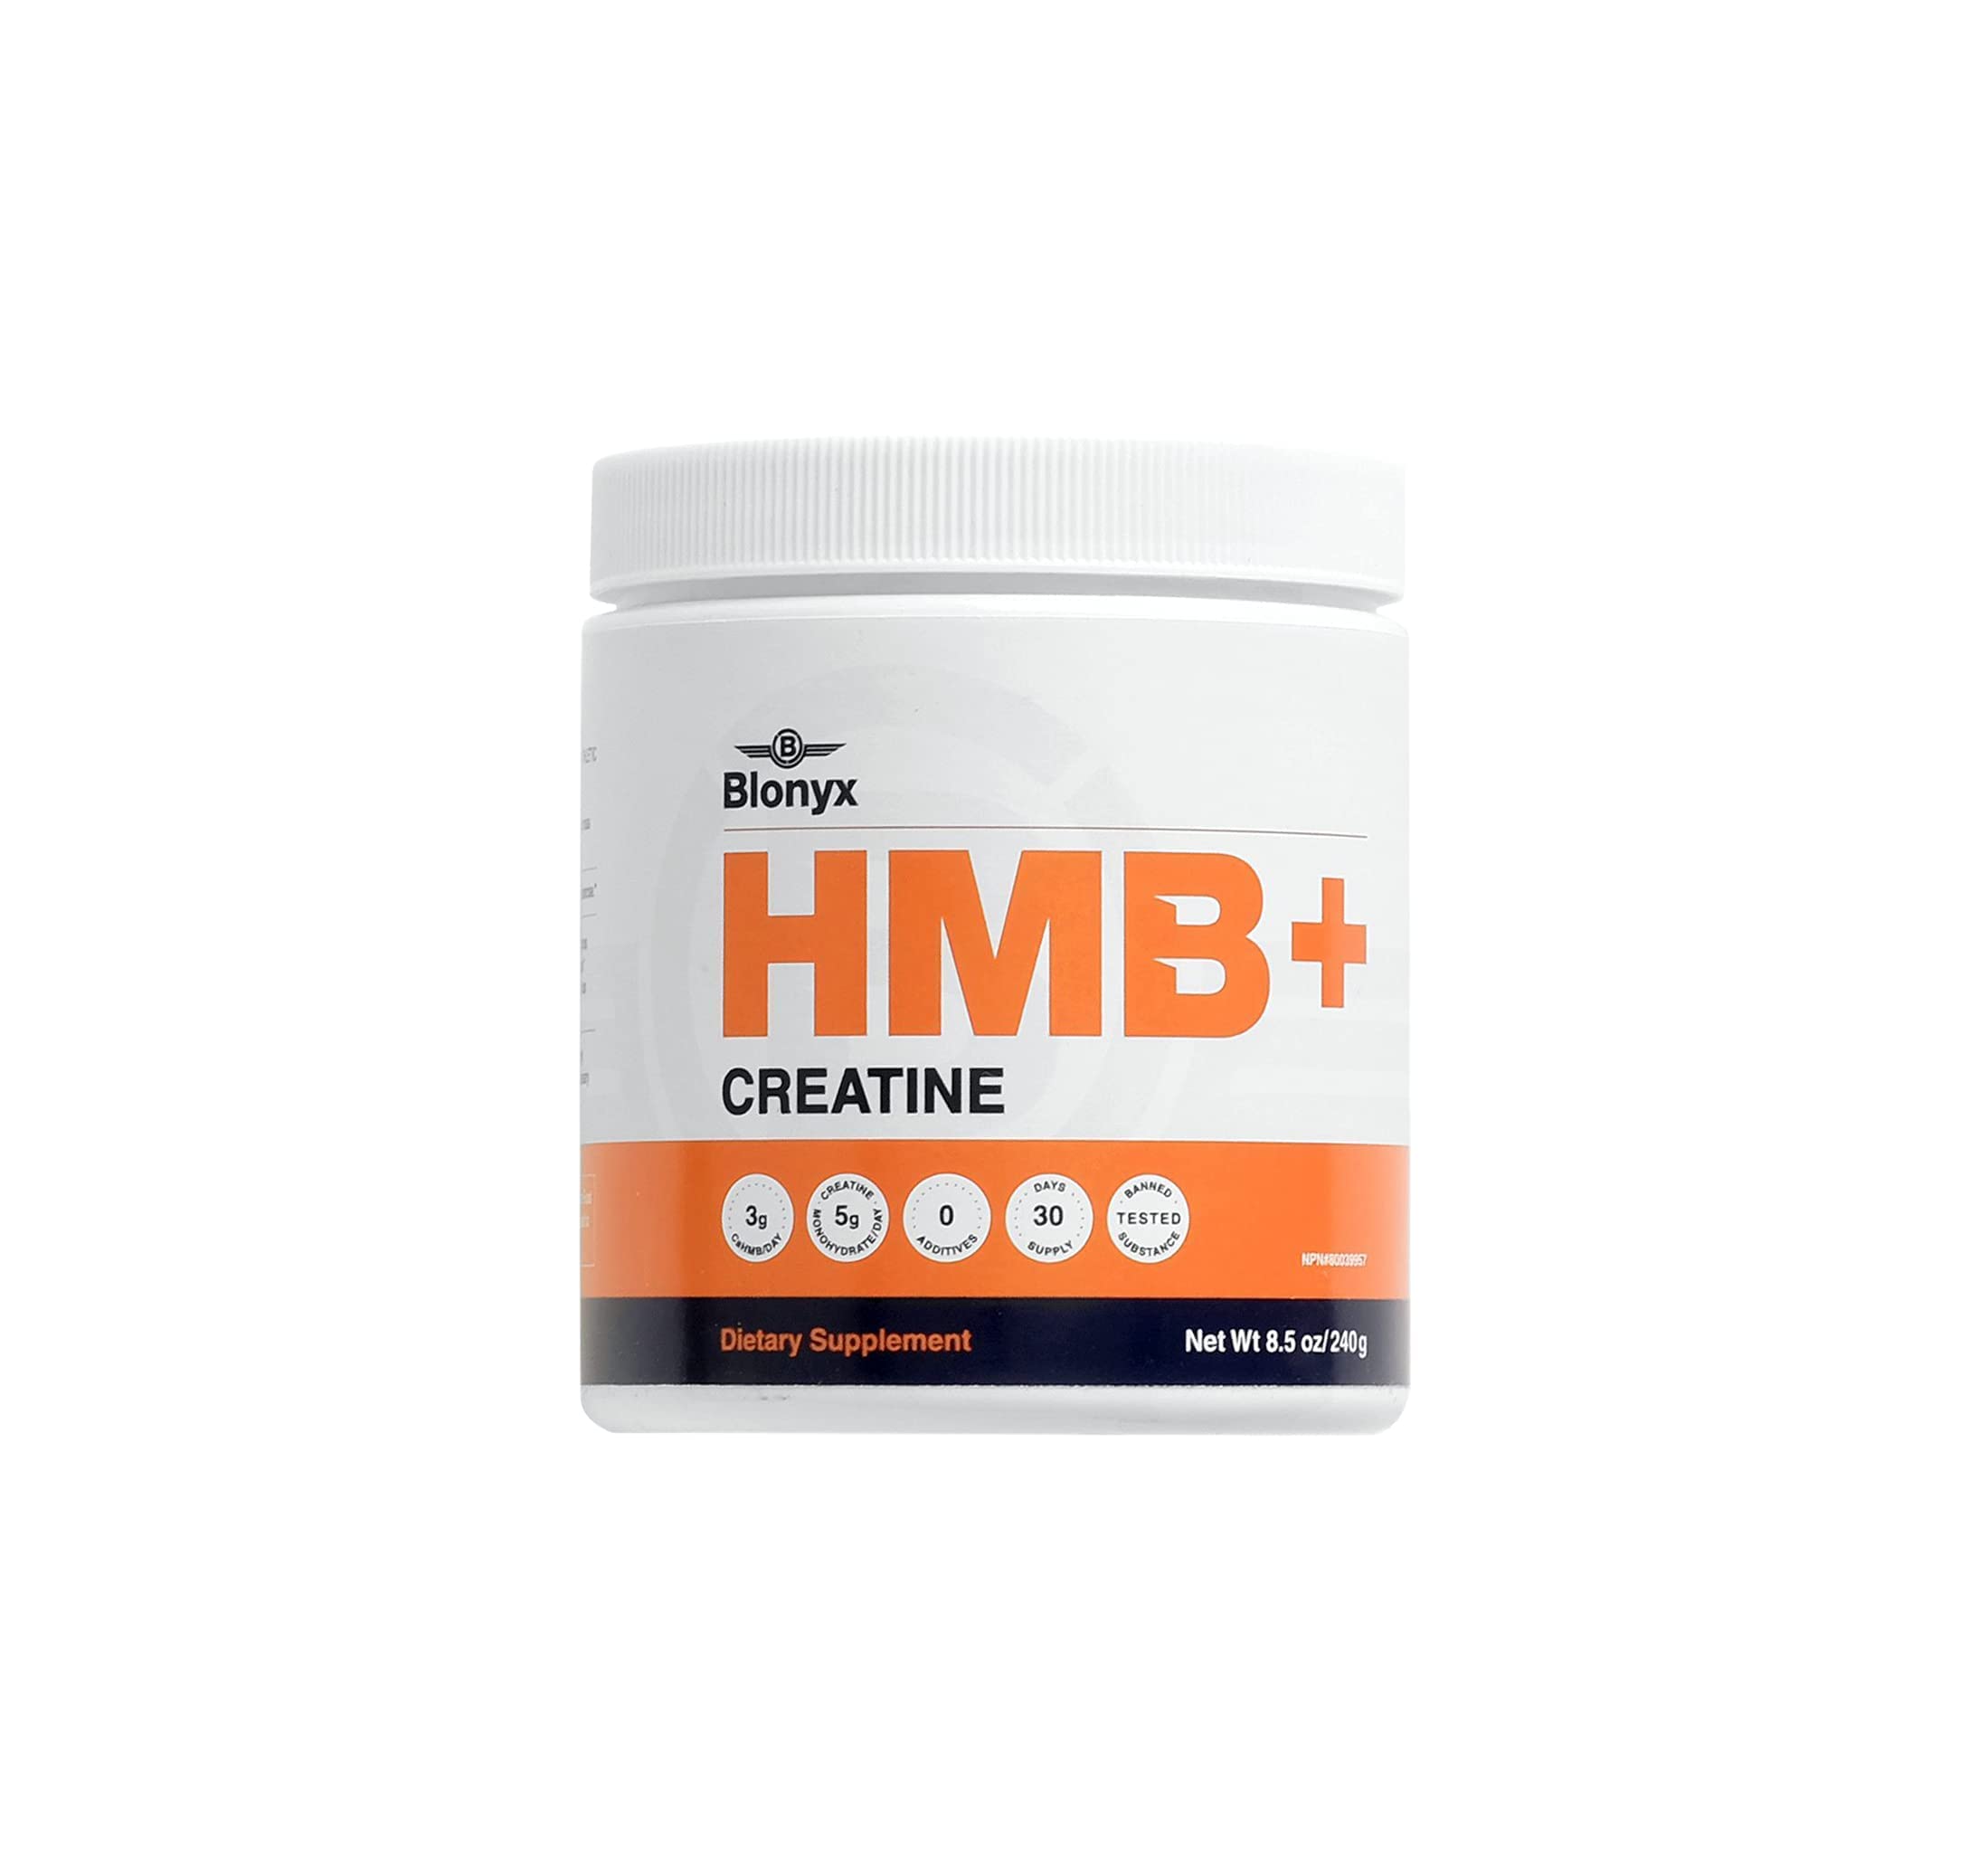 Blonyx Power & Strength Bundle, HMB+ Creatine & Egg White Protein Isolate, 30 Day Supply